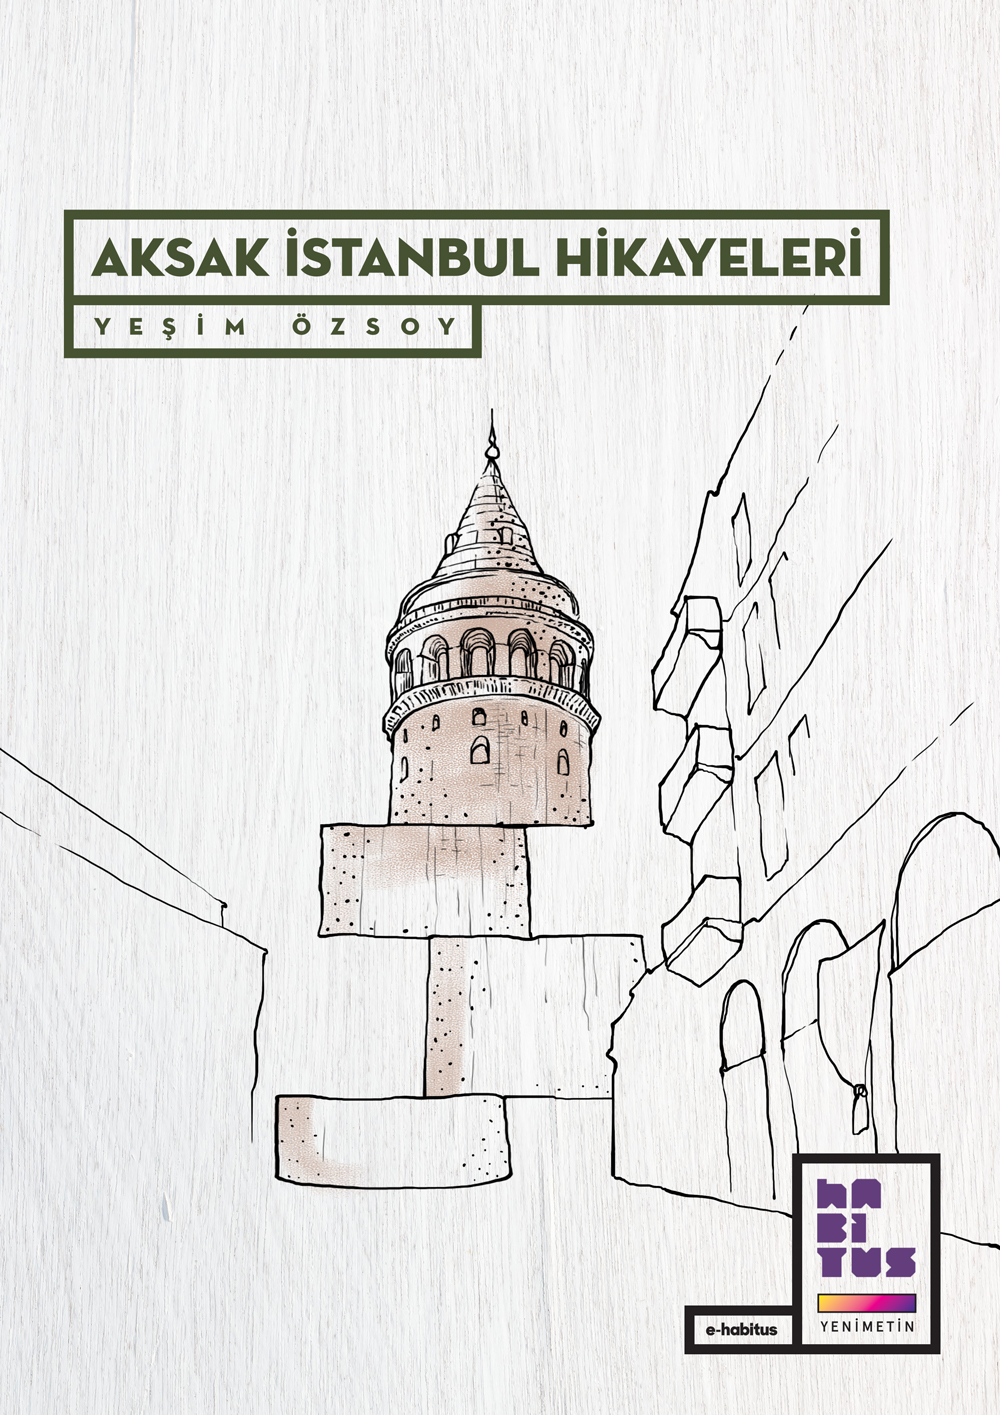 Aksak İstanbul Hikayeleri